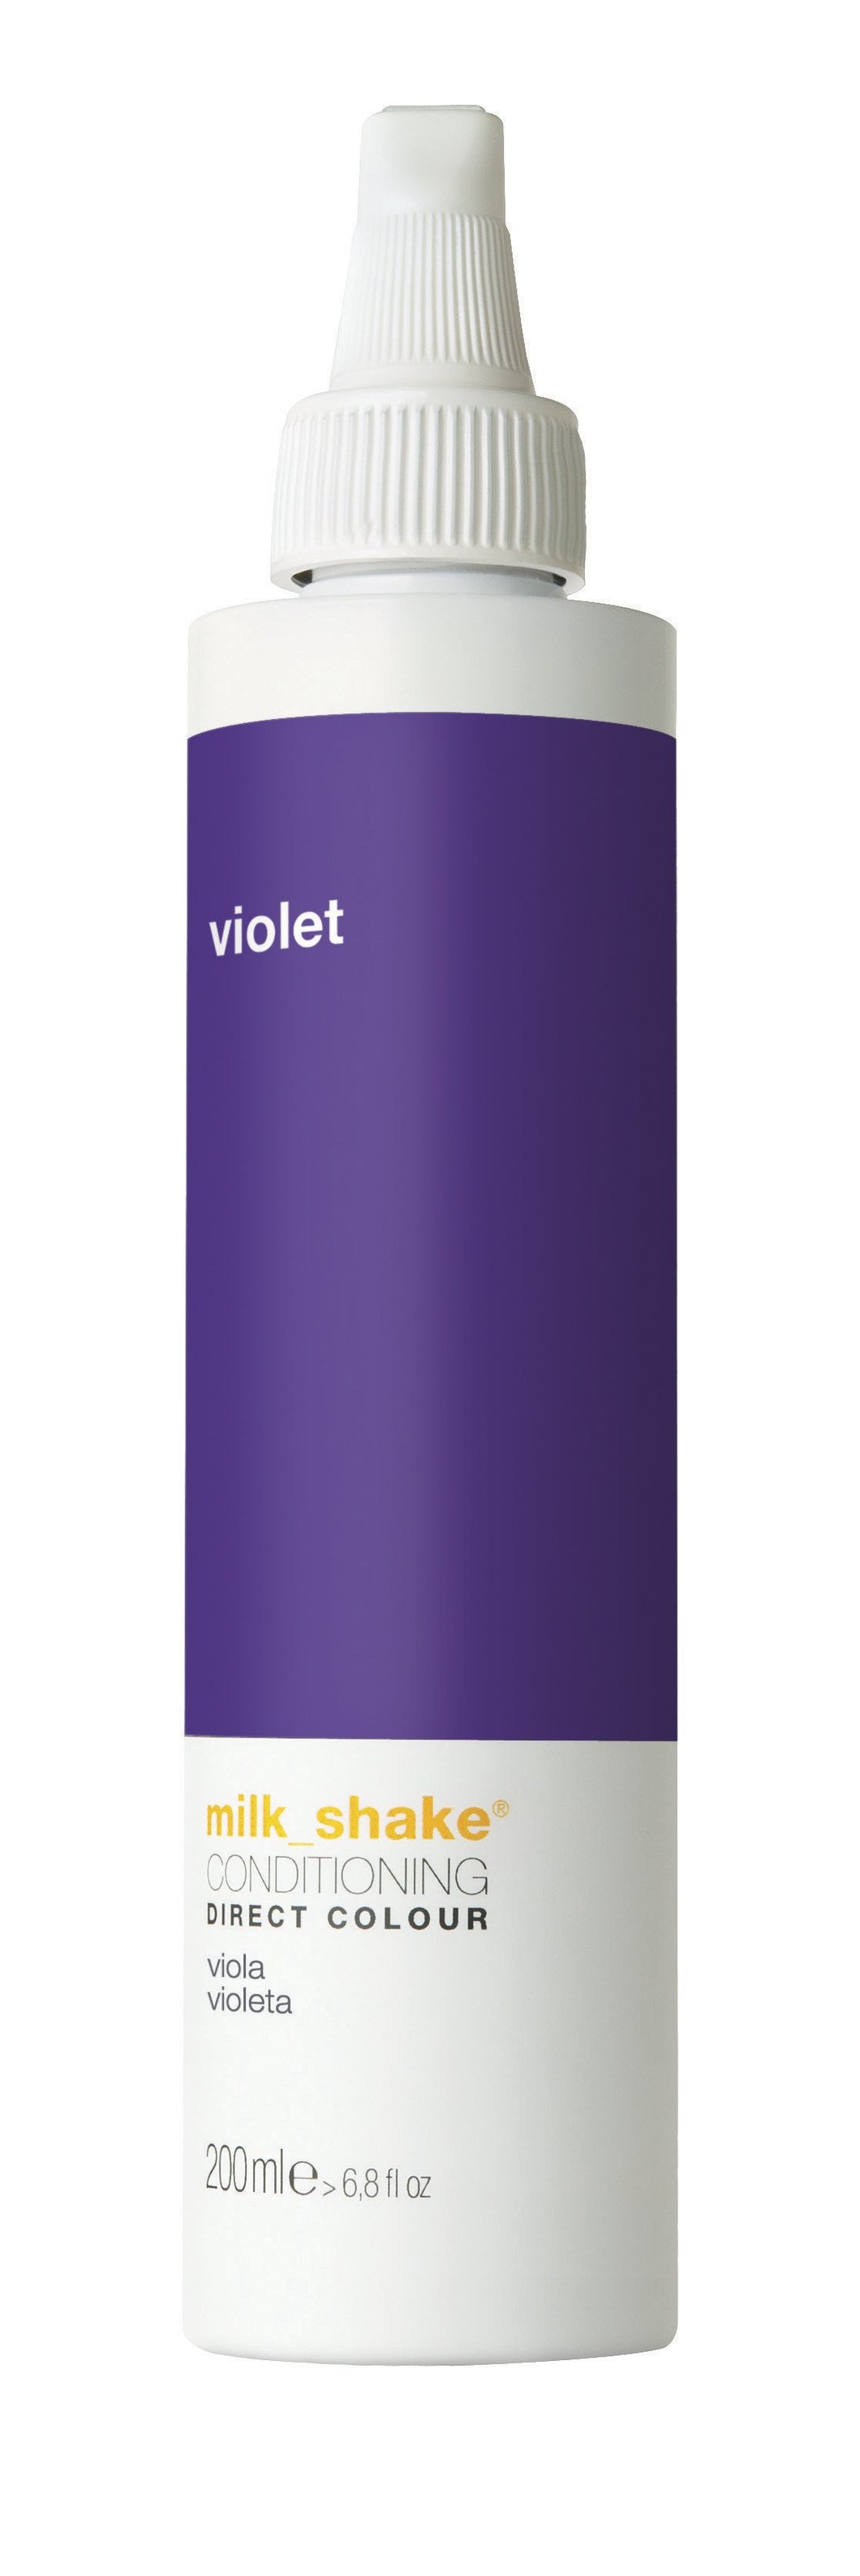 milk_shake direct colour violet-0